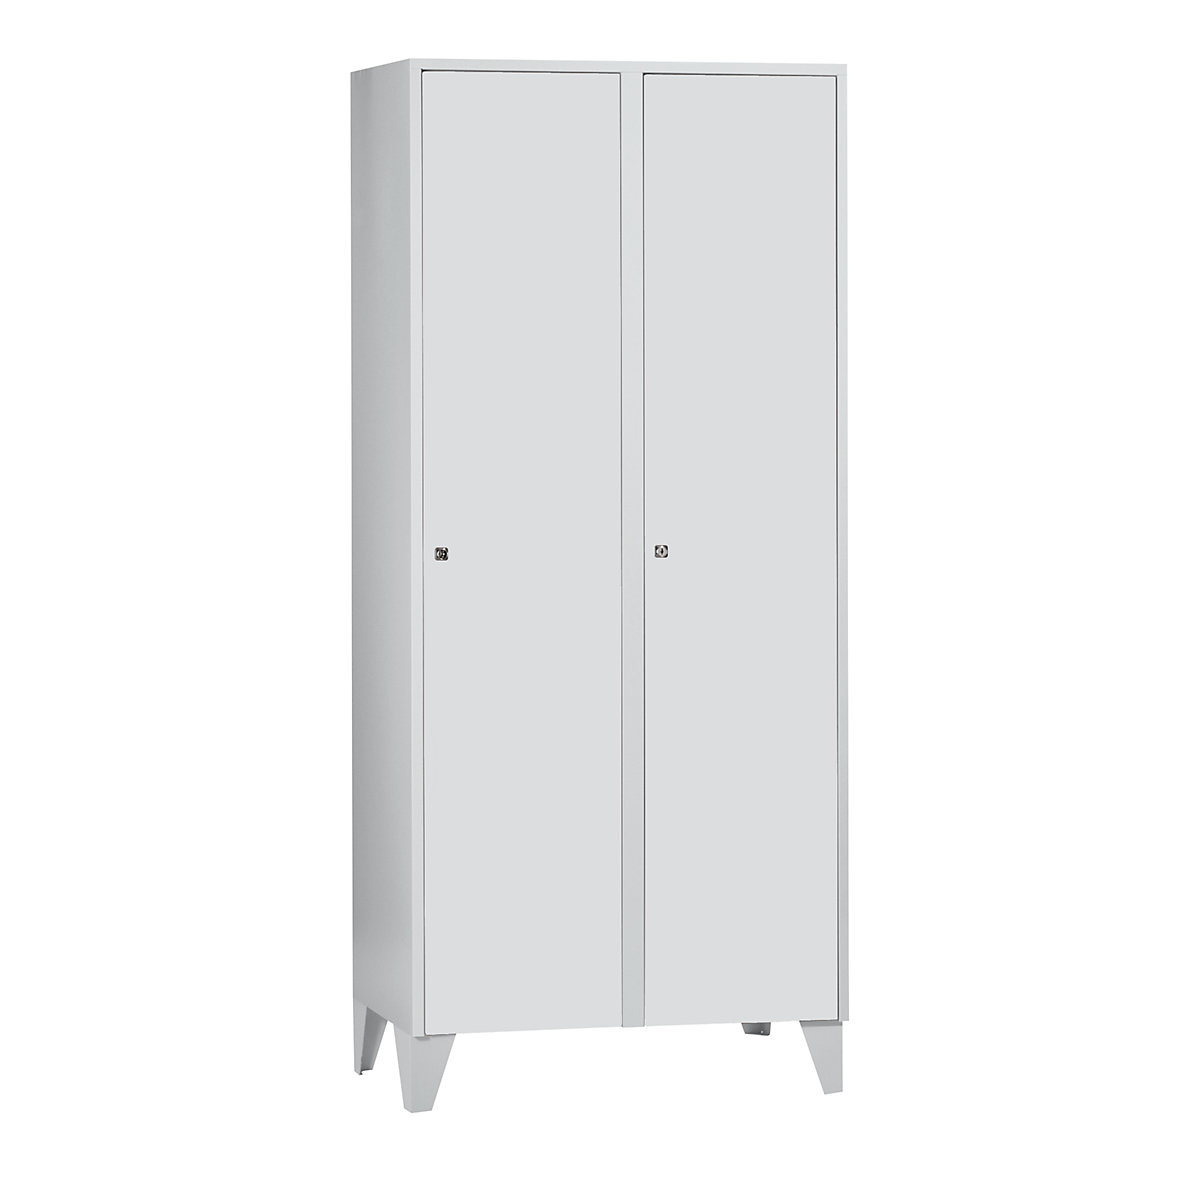 Cloakroom locker with feet – Wolf, HxWxD 1850 x 800 x 500 mm, 2 compartments, light grey-6